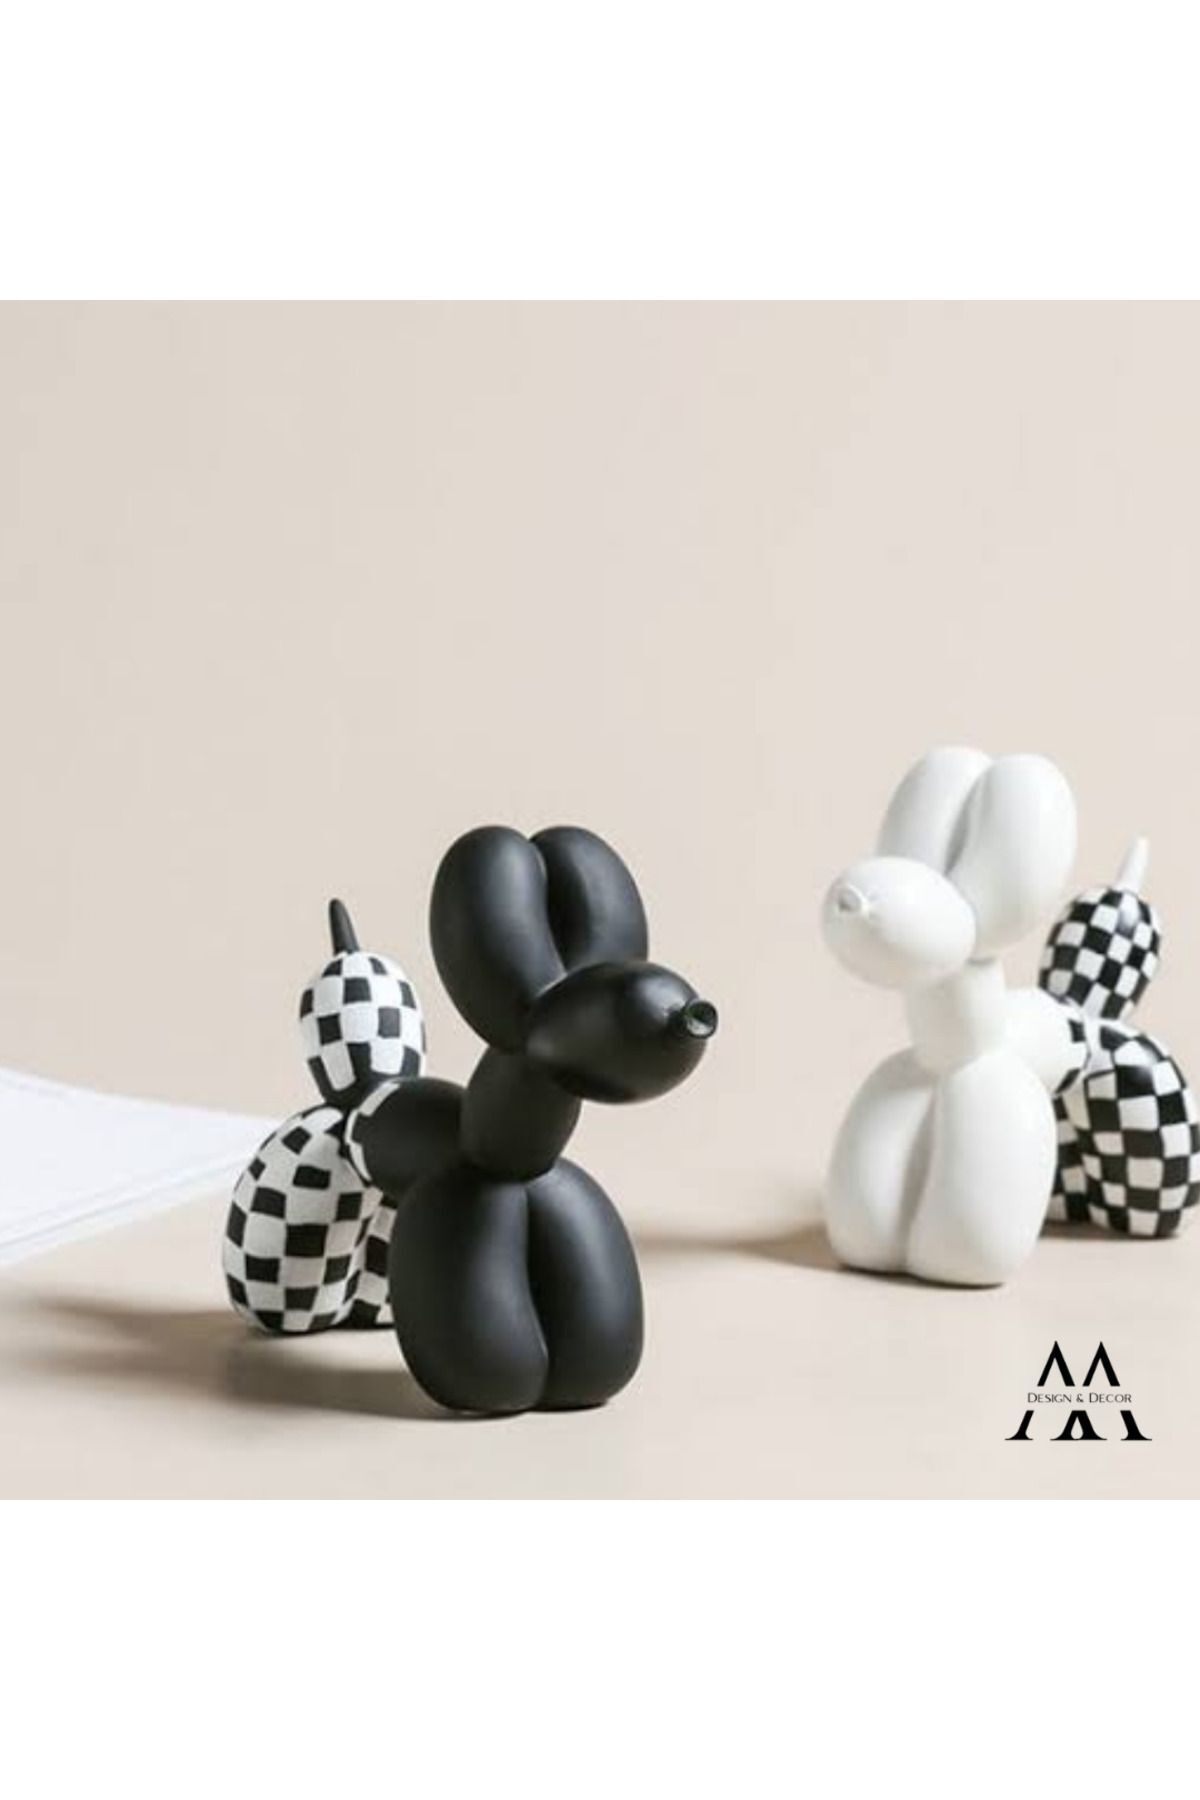 M Design Decor Jeff Koons Balloon Dog Balon Köpek Pop Art Heykel